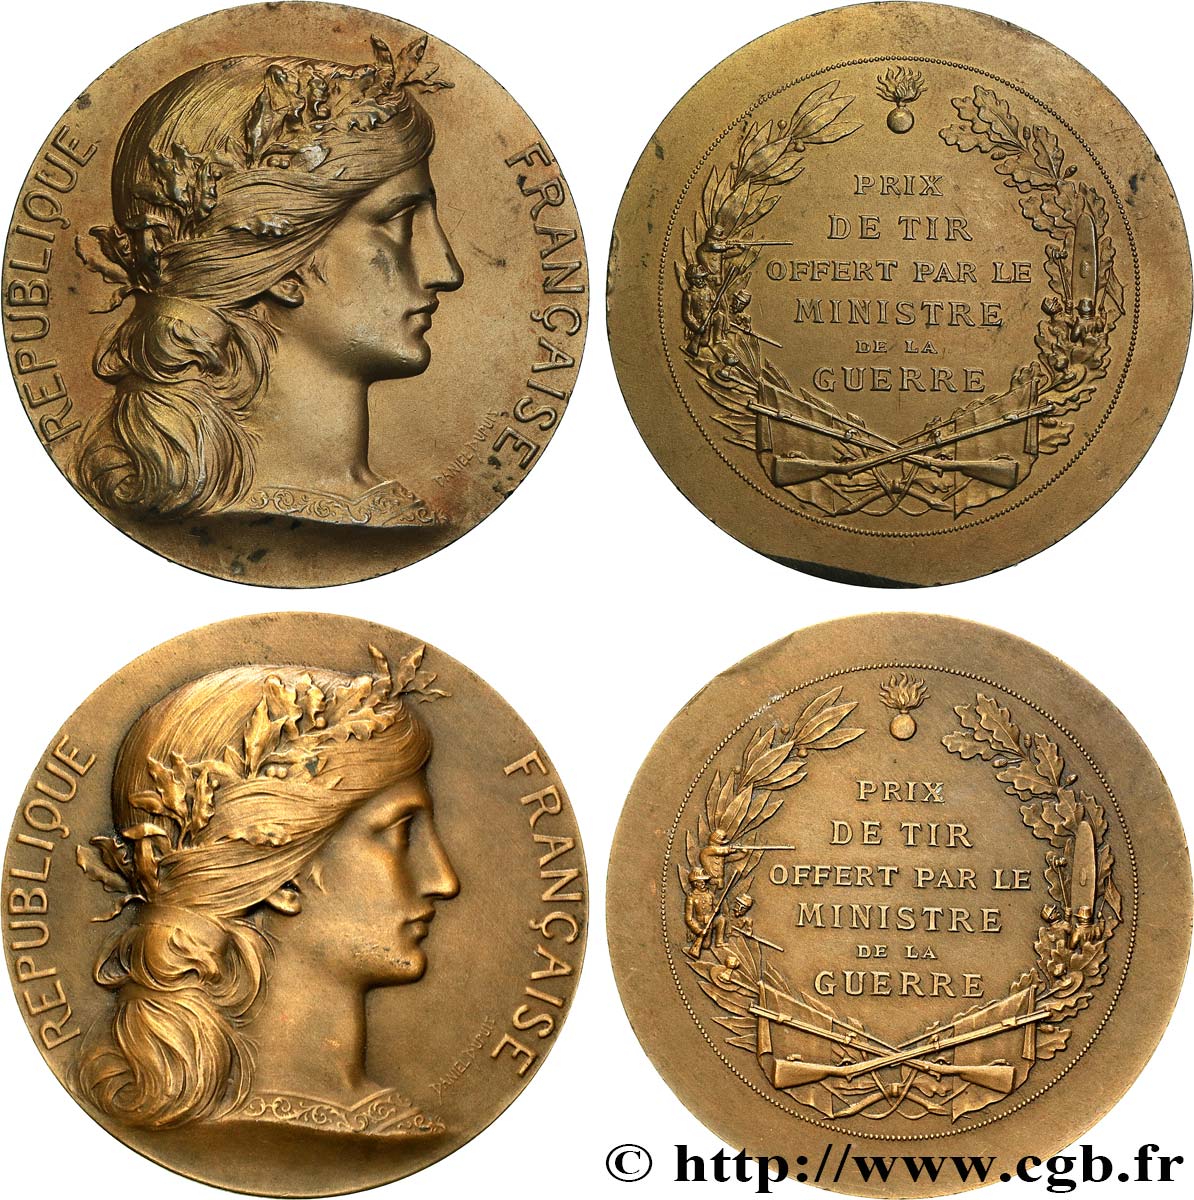 III REPUBLIC Médaille, Prix de tir offert, lot de 2 ex. AU